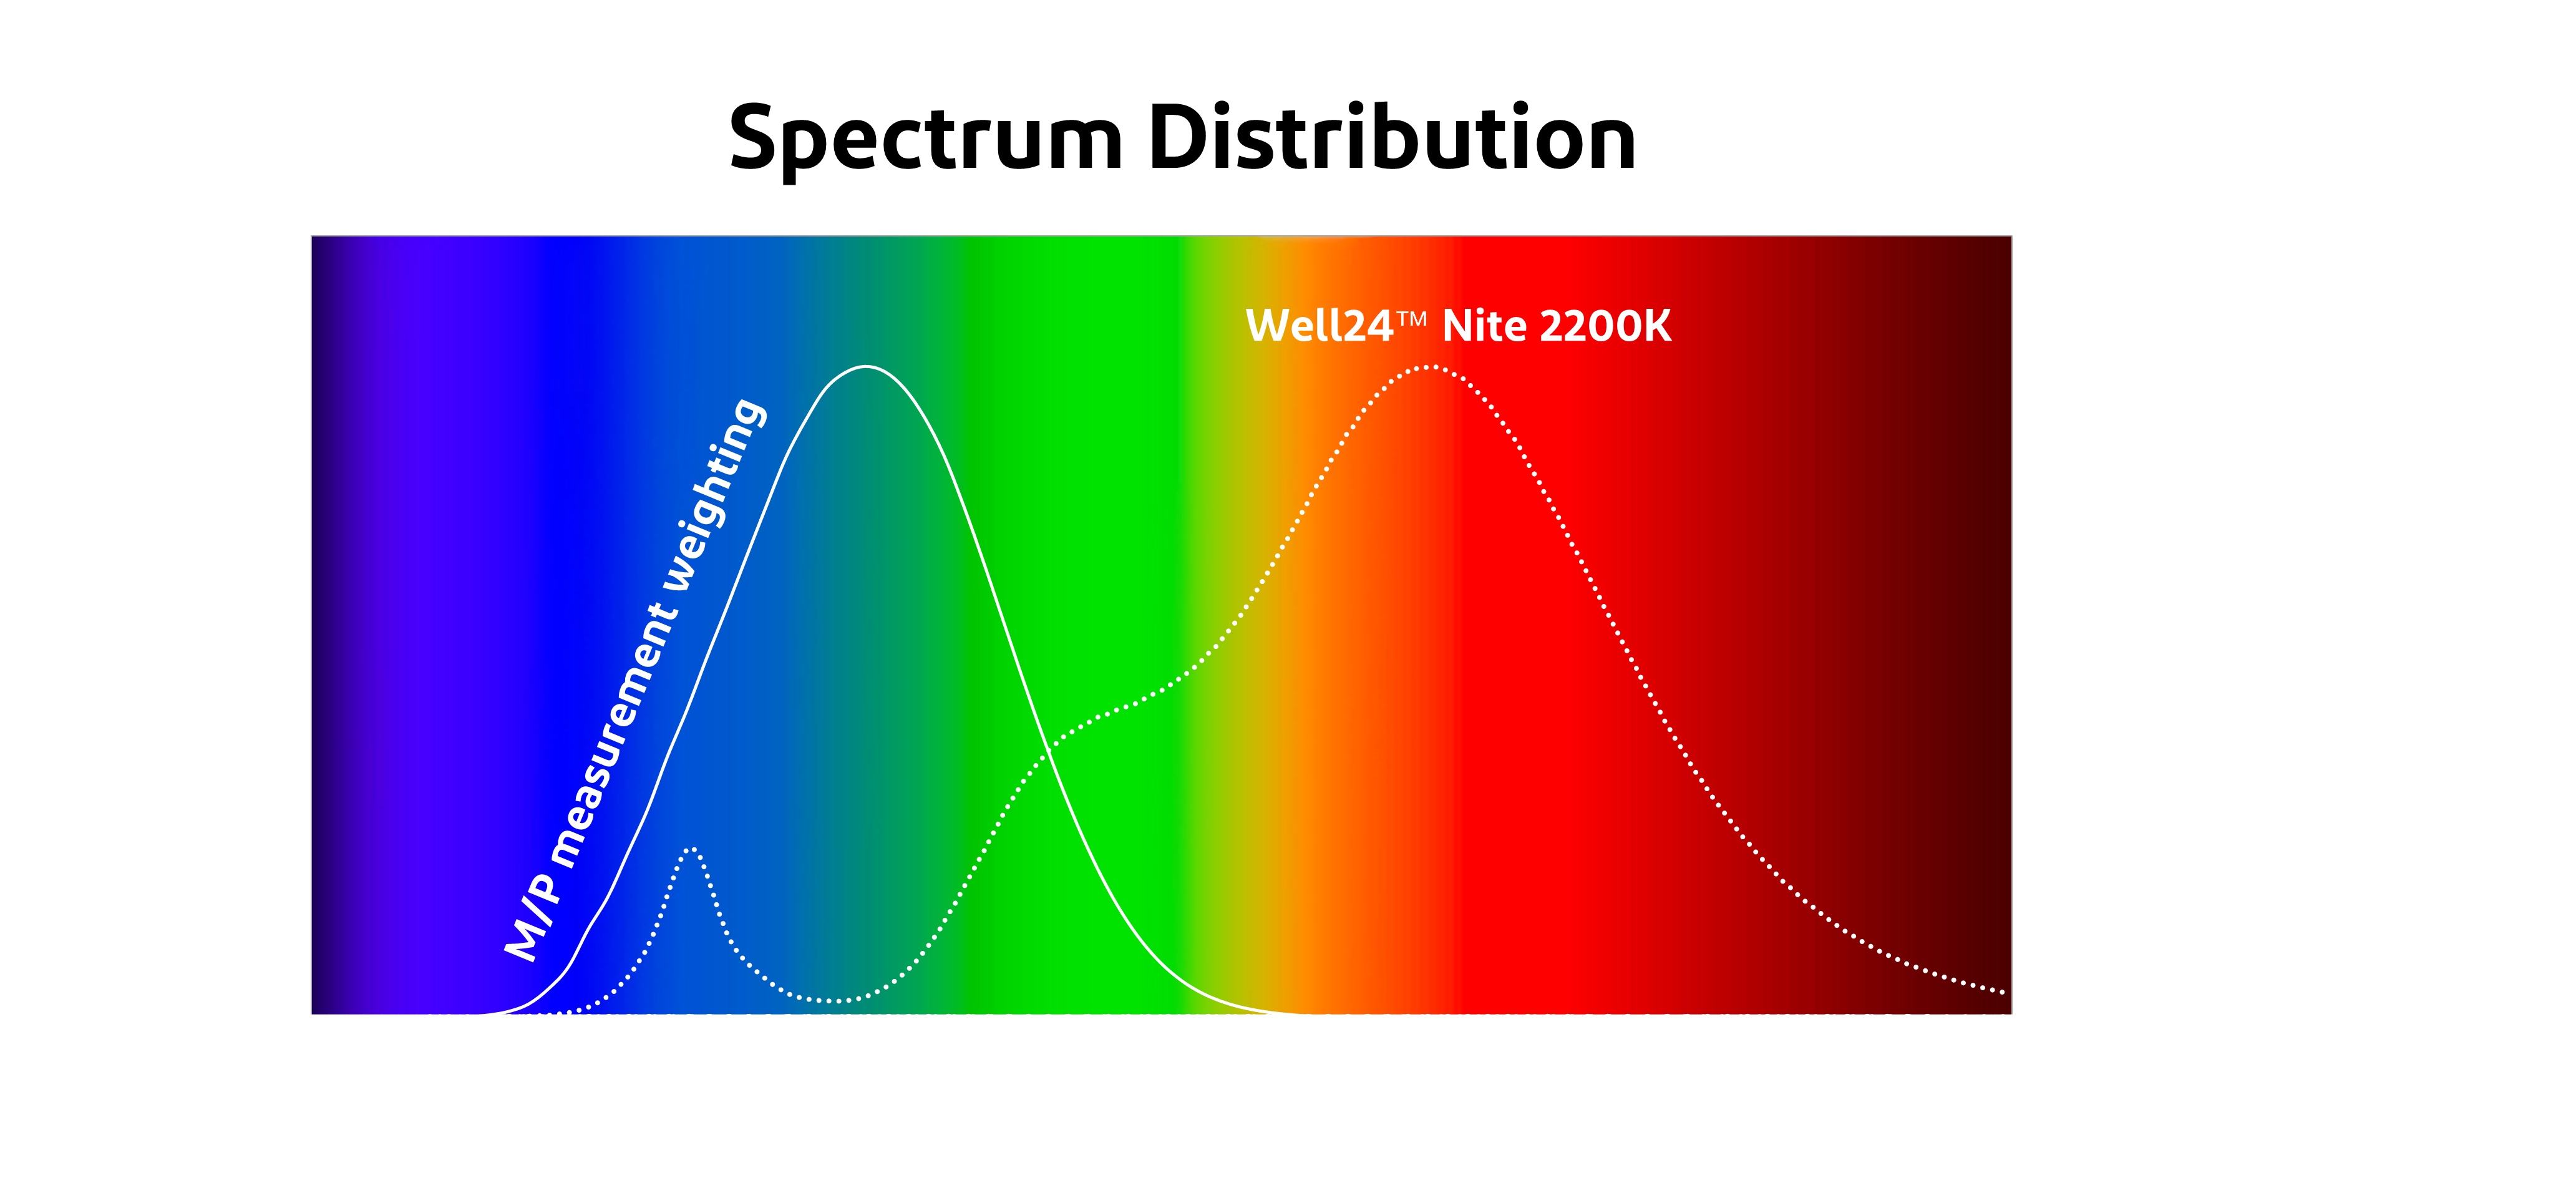 WELL24 2200K spectrum distribution